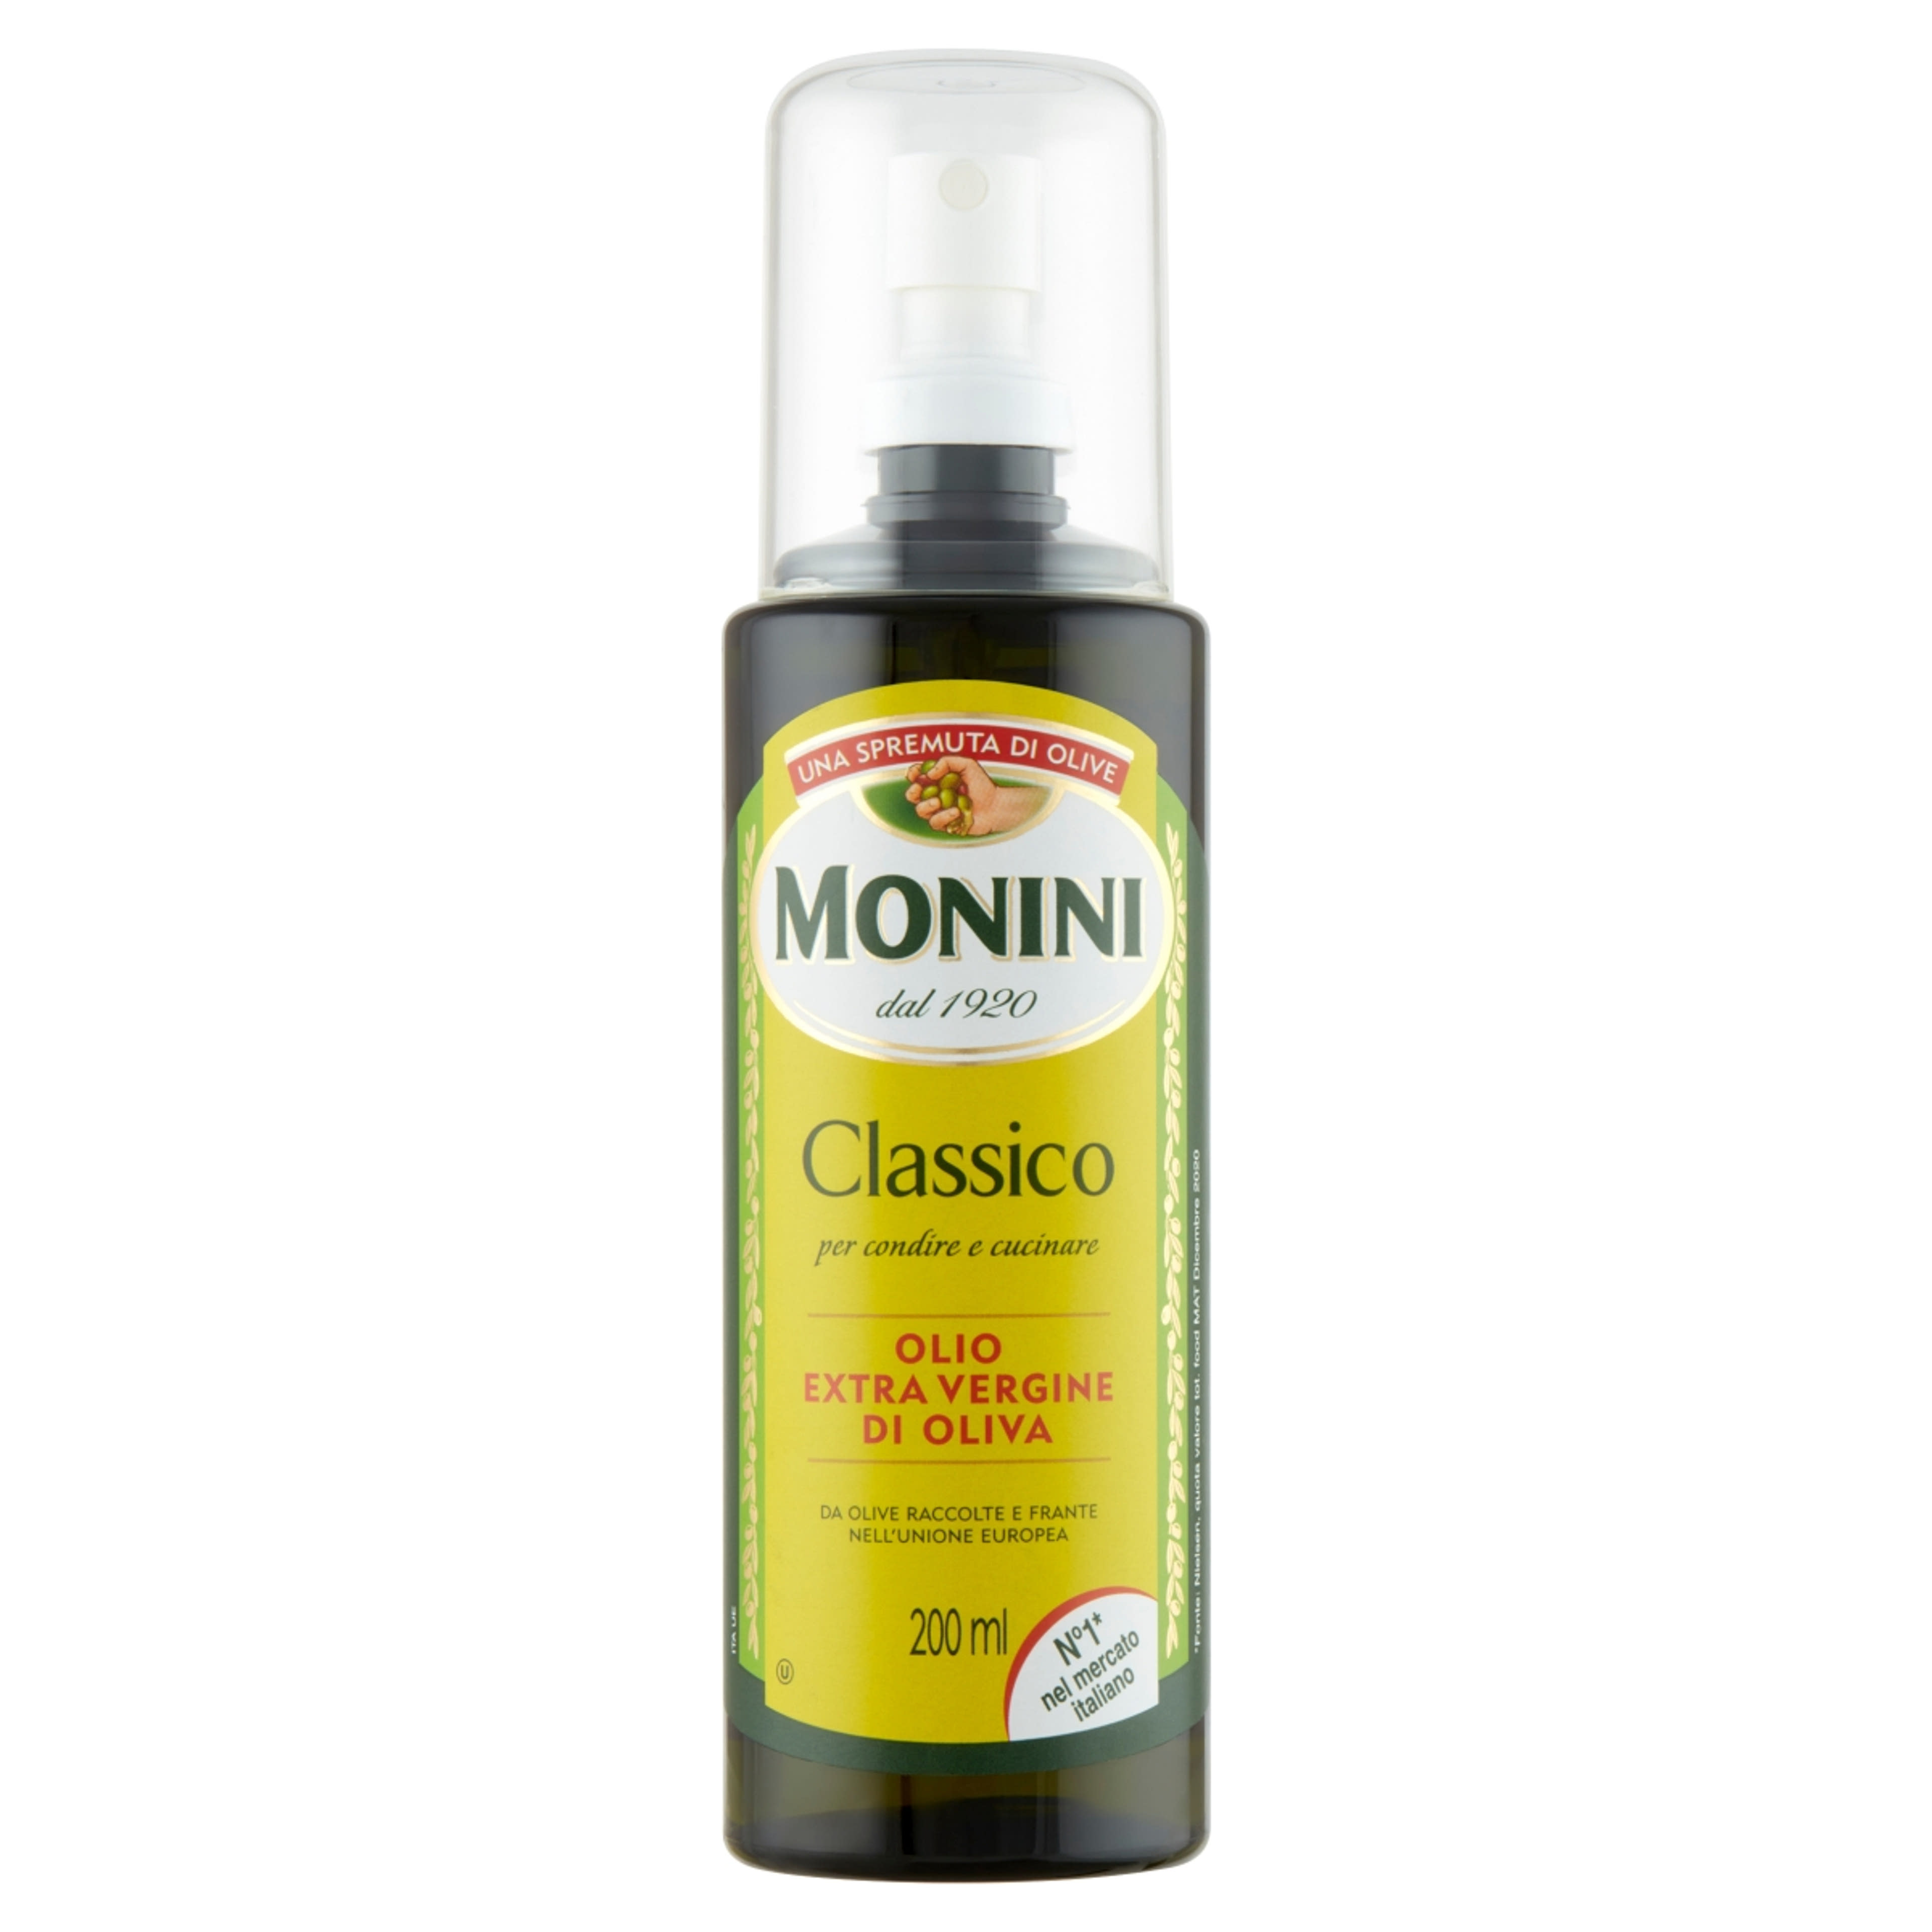 Monini classico extra szűz olivaolaj spray - 200 ml-1